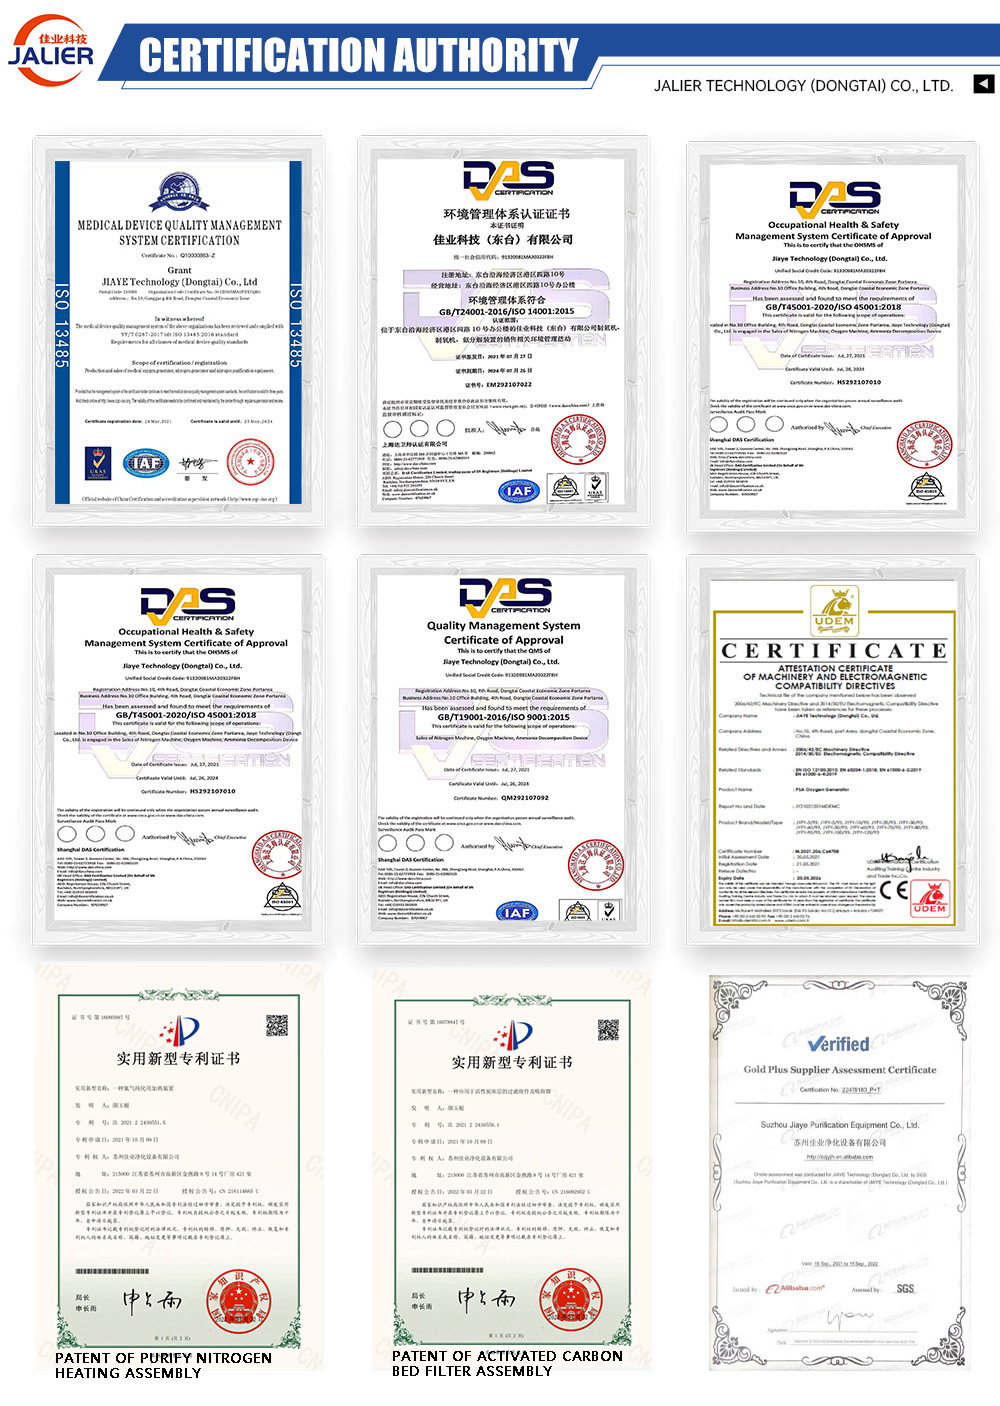 certifications-1